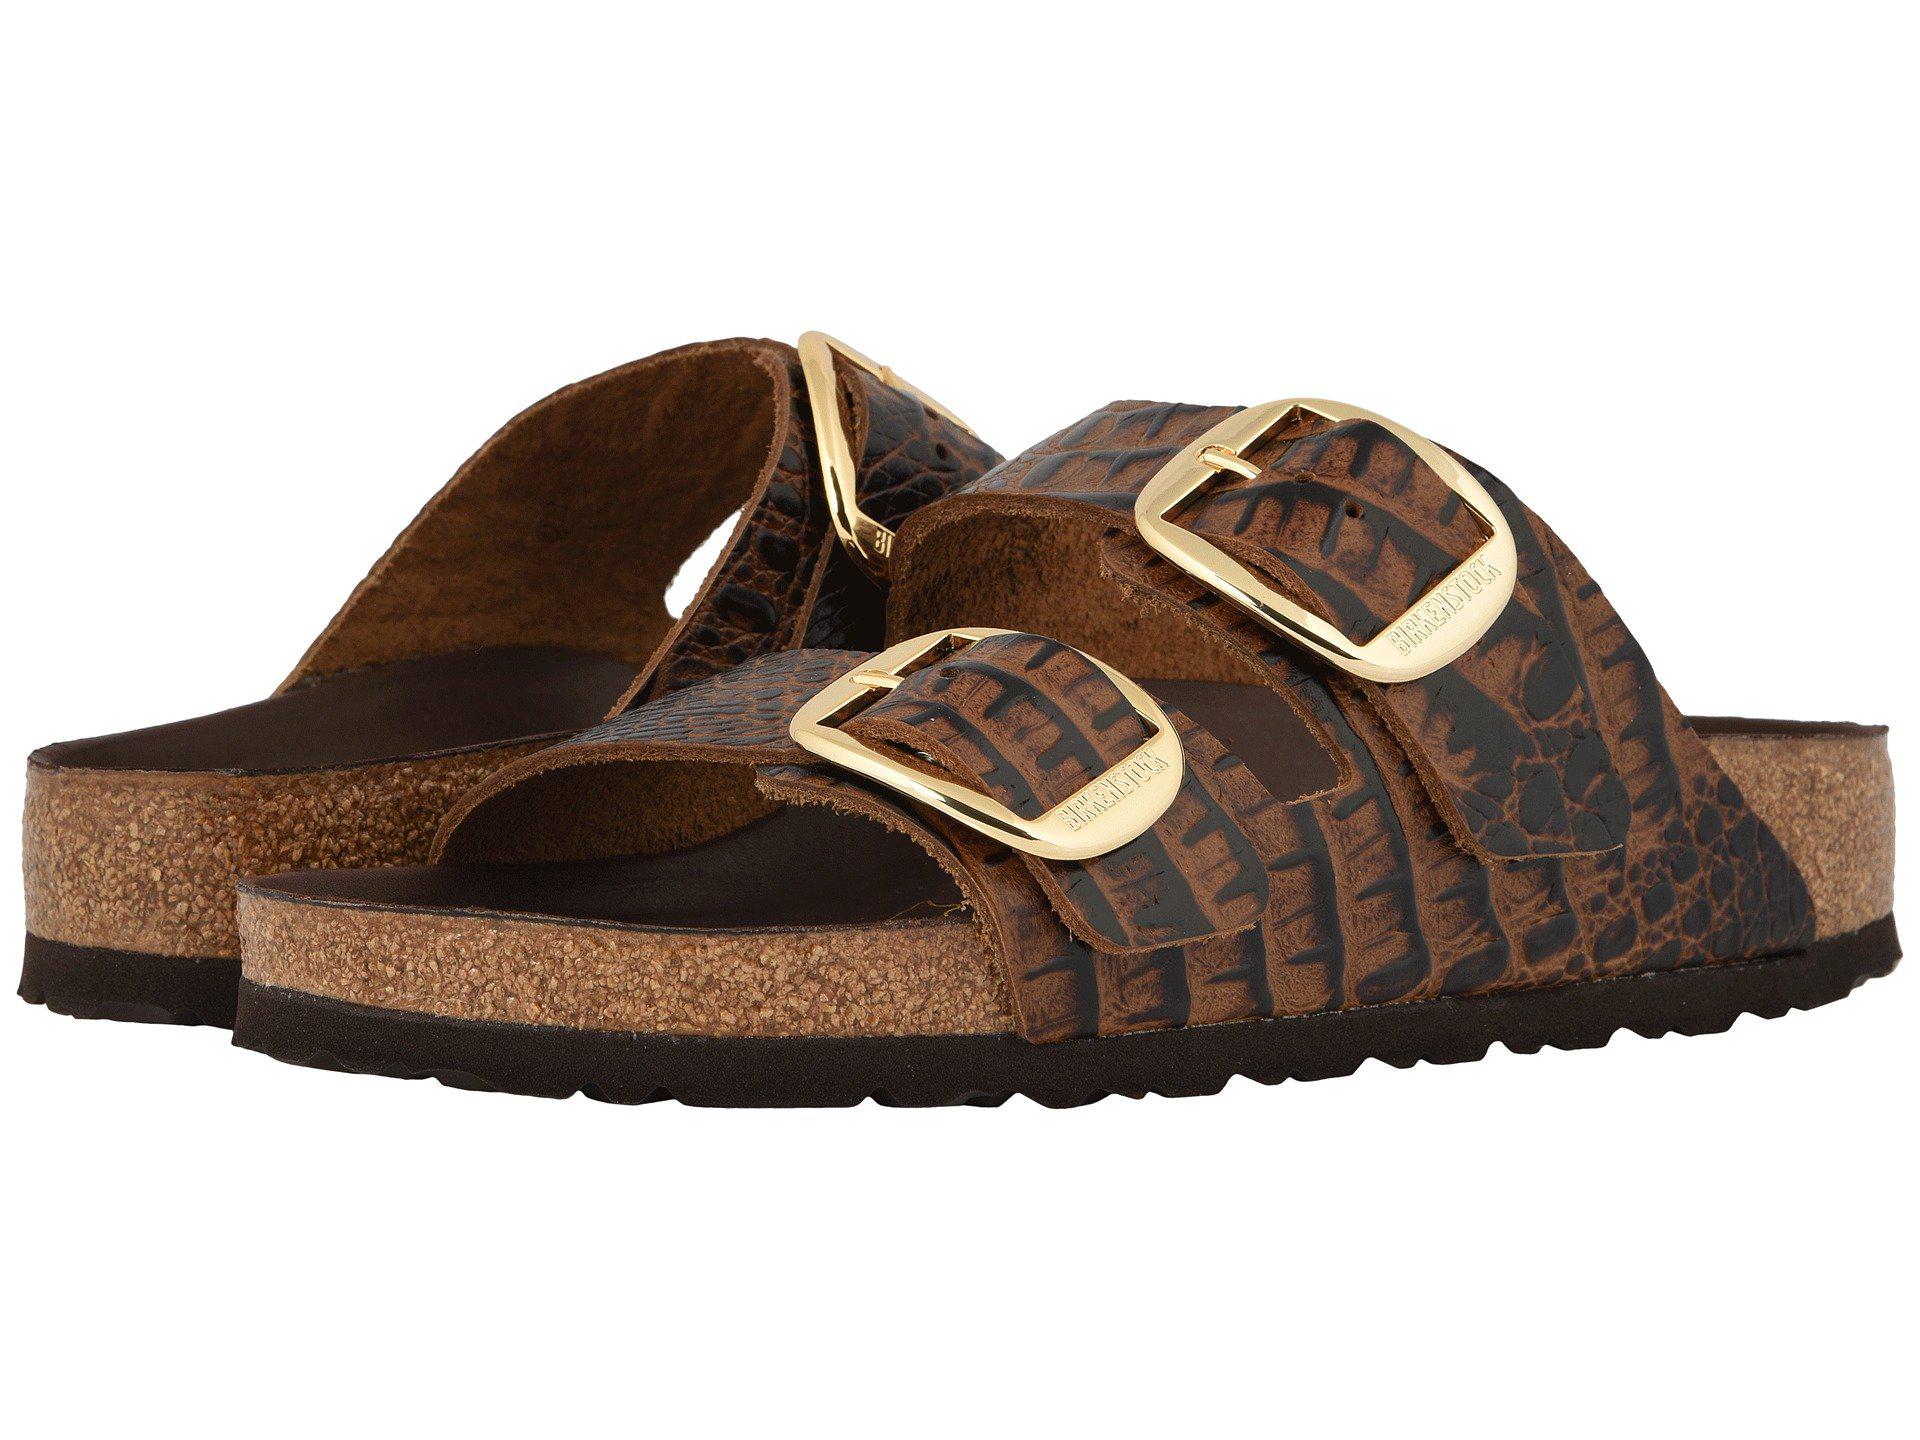 Birkenstock Arizona Big Buckle Stamped Leather Sandals in Brown - Lyst